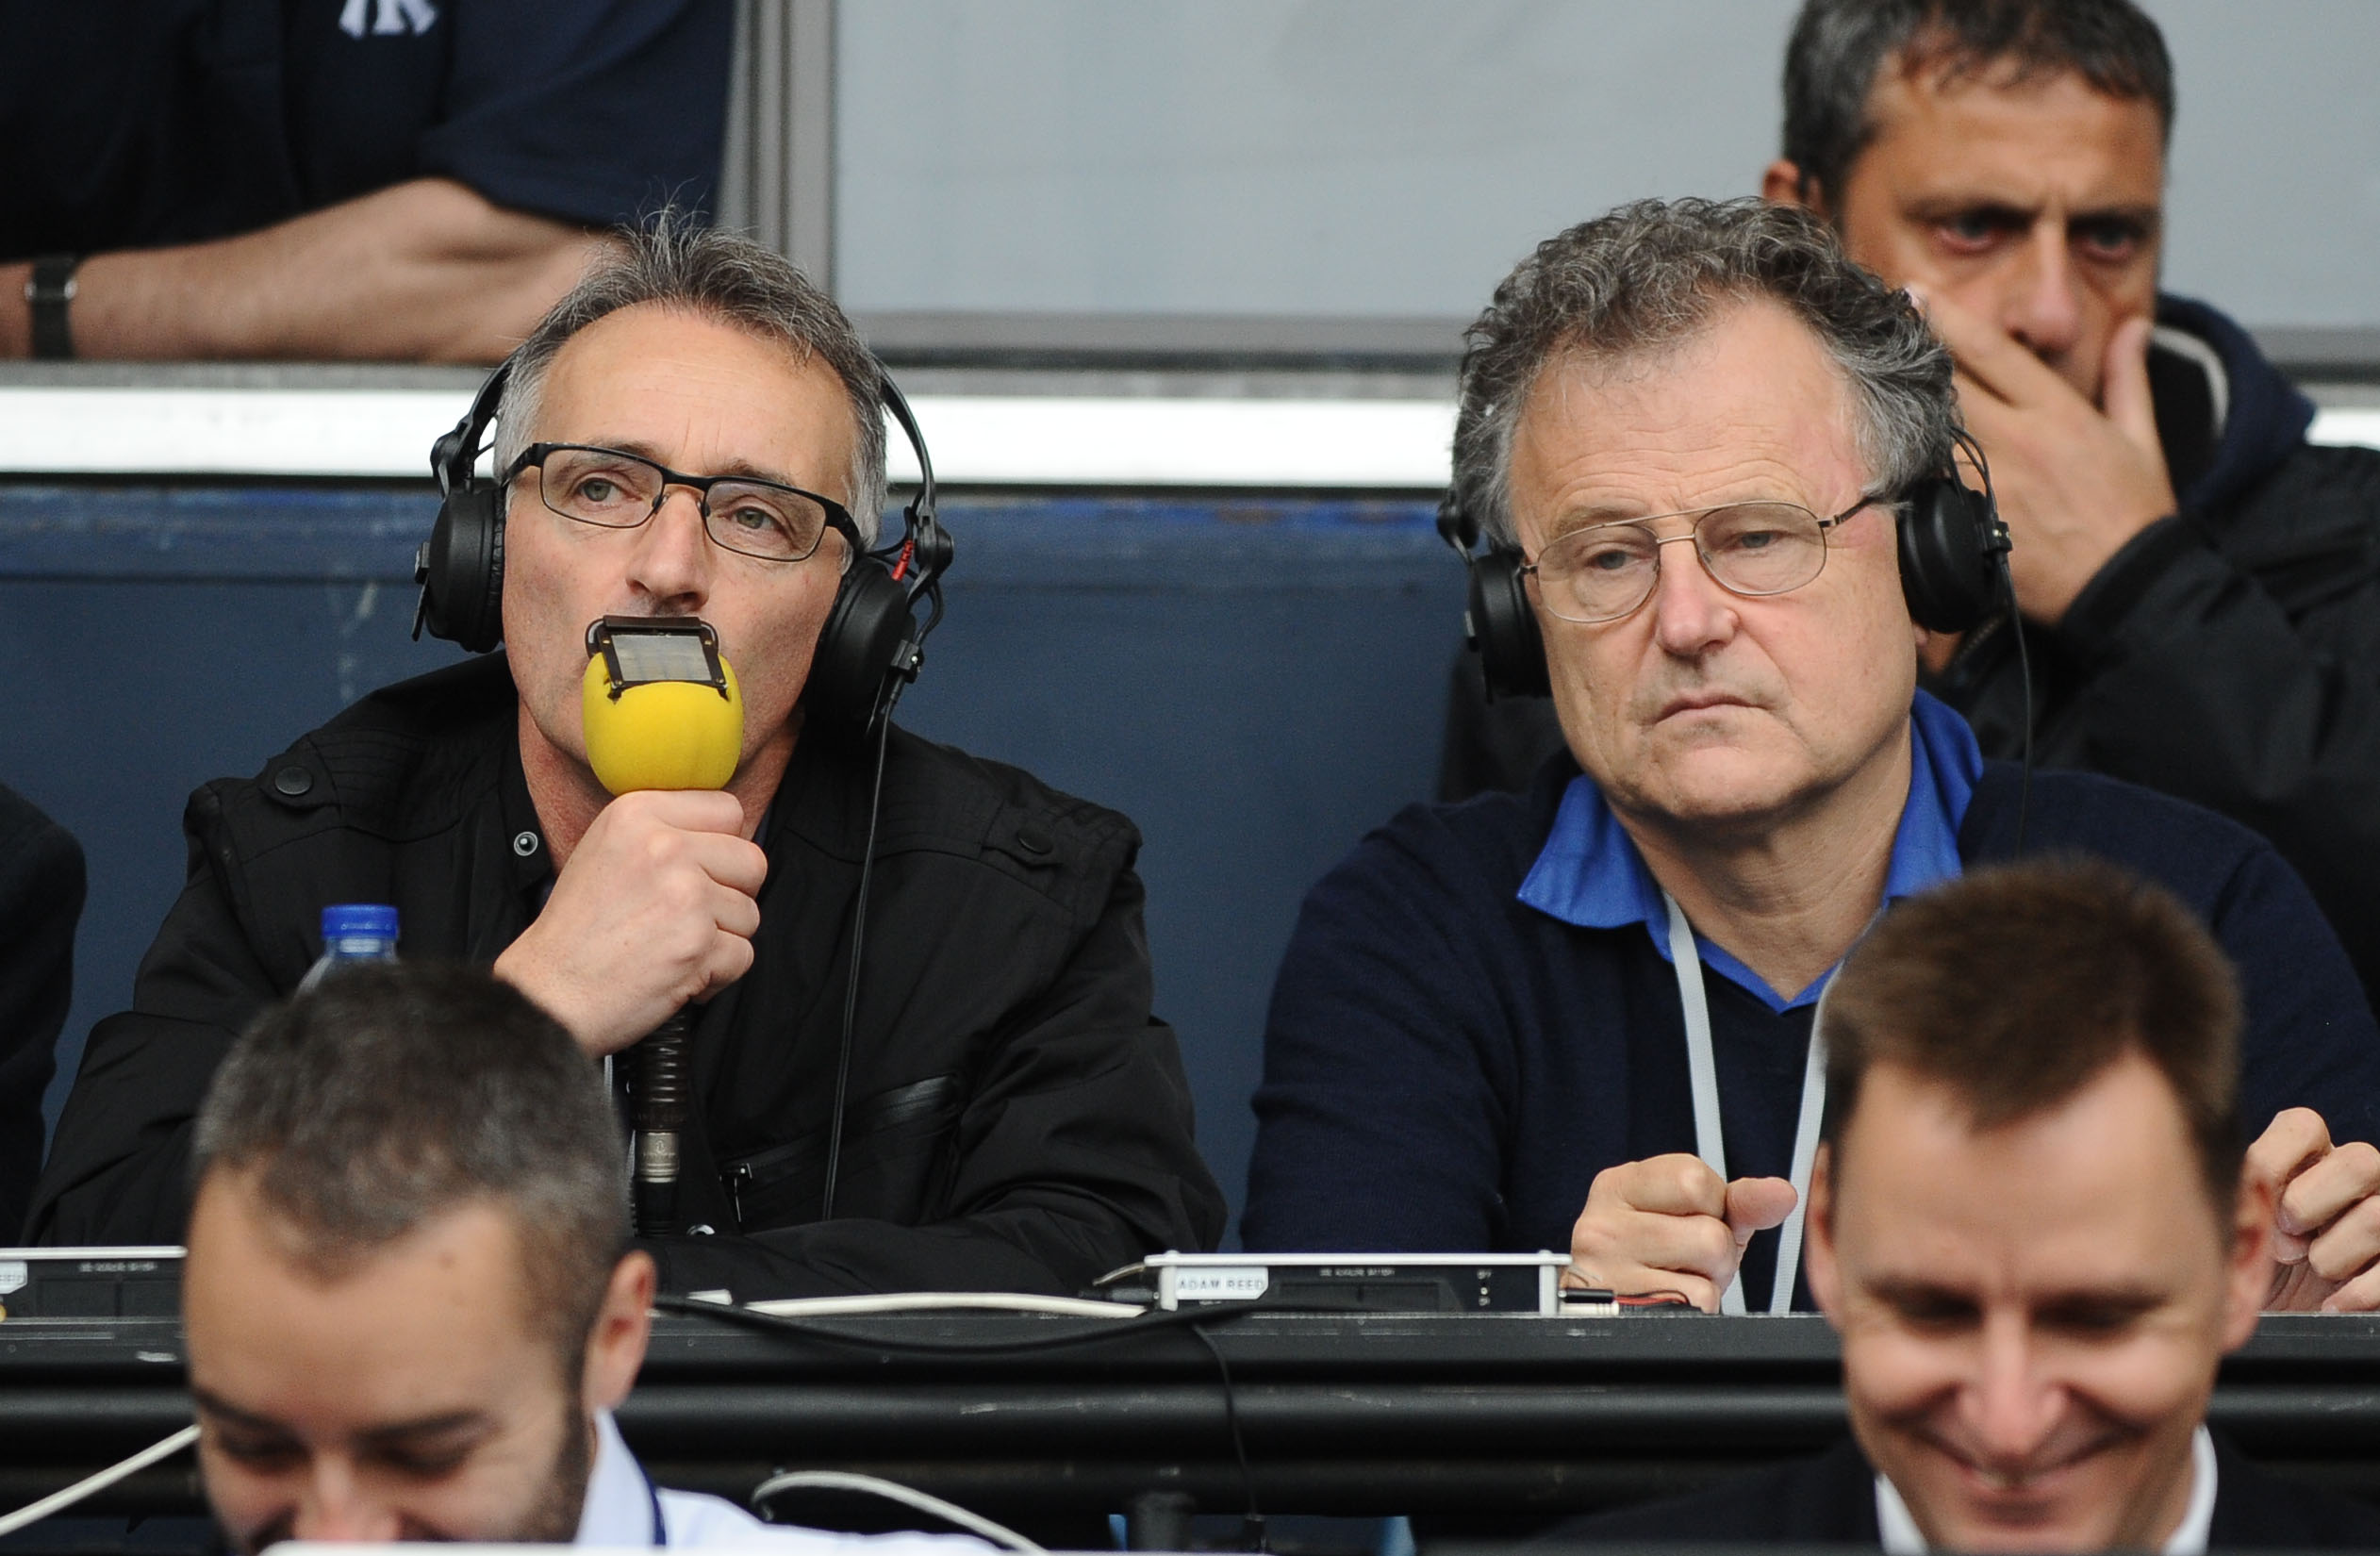 Mike Ingham commentating on Tottenham vs Chelsea in the Premier League